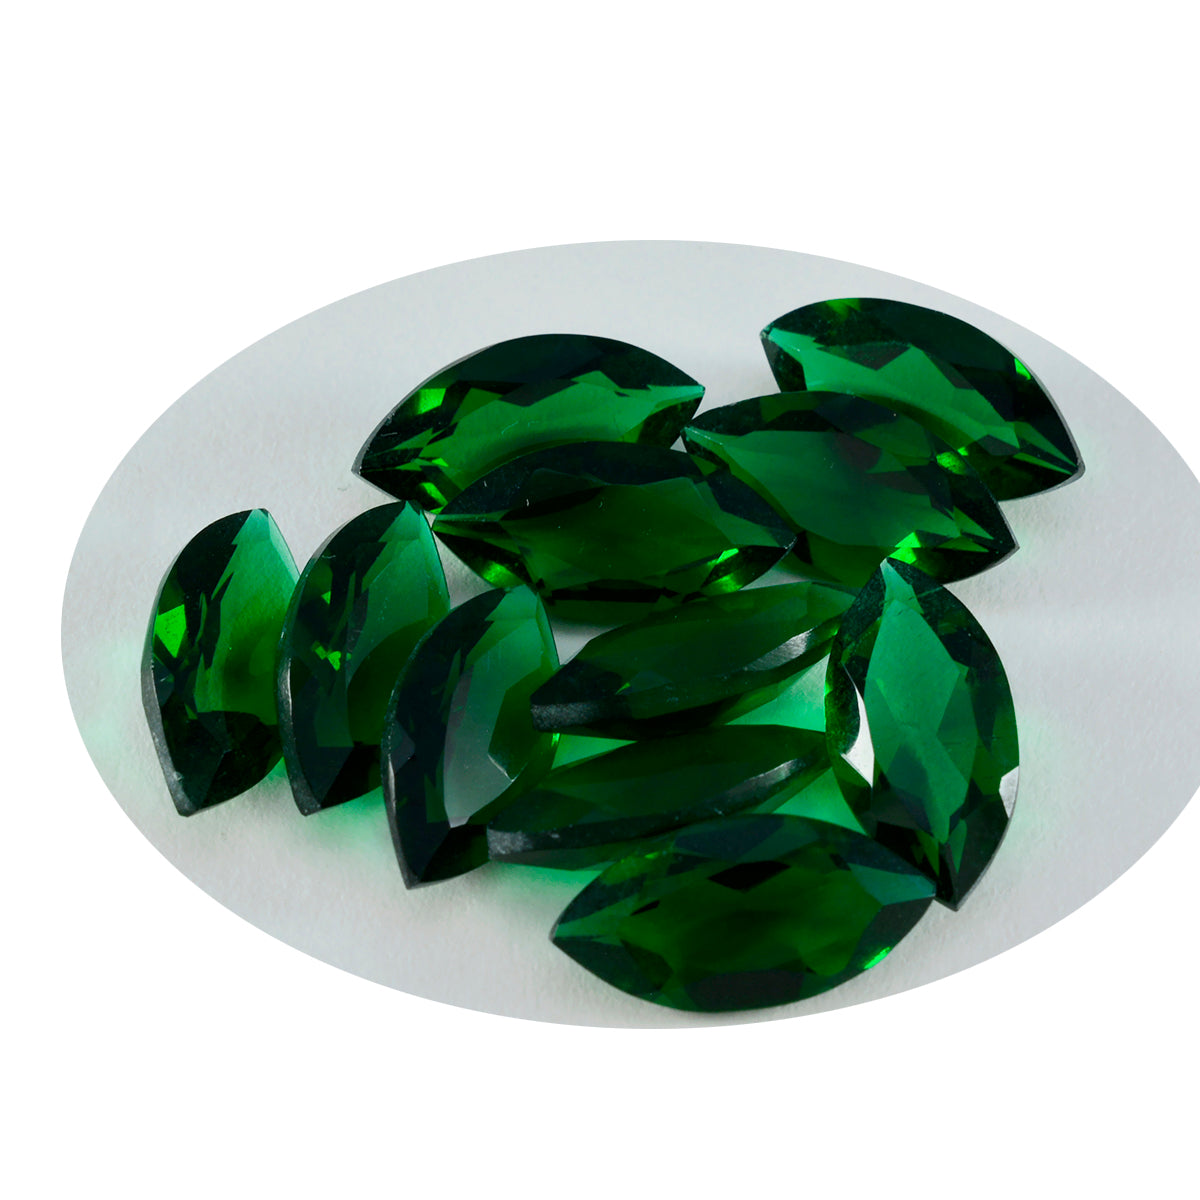 Riyogems 1PC Groene Smaragd CZ Facet 8x16 mm Marquise Vorm A+1 Kwaliteit Edelstenen